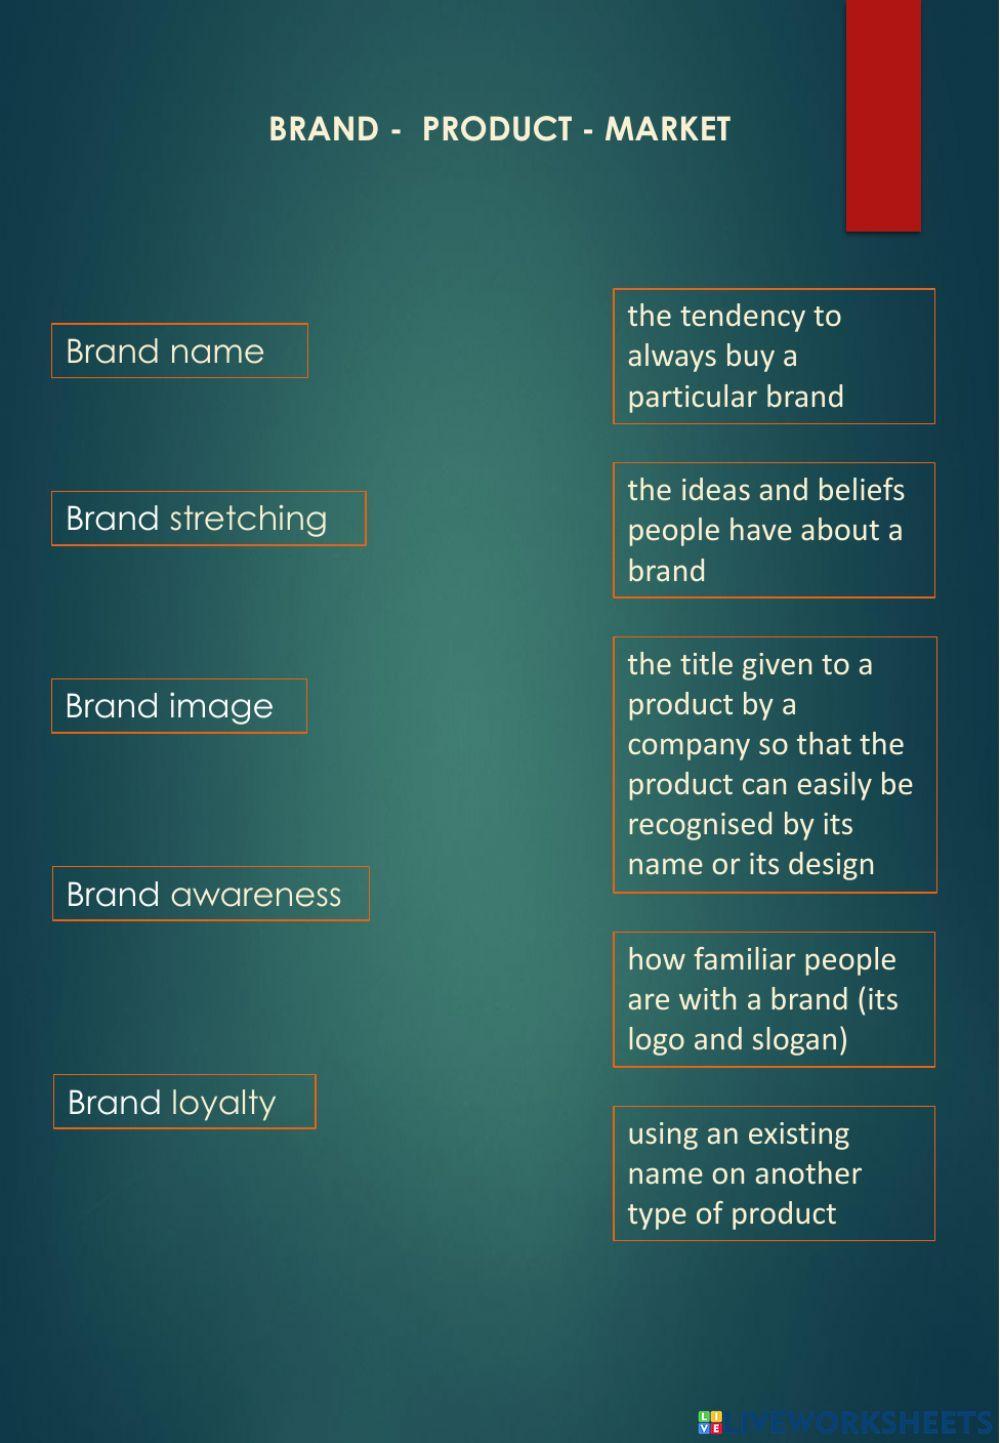 Brand - Product - Market